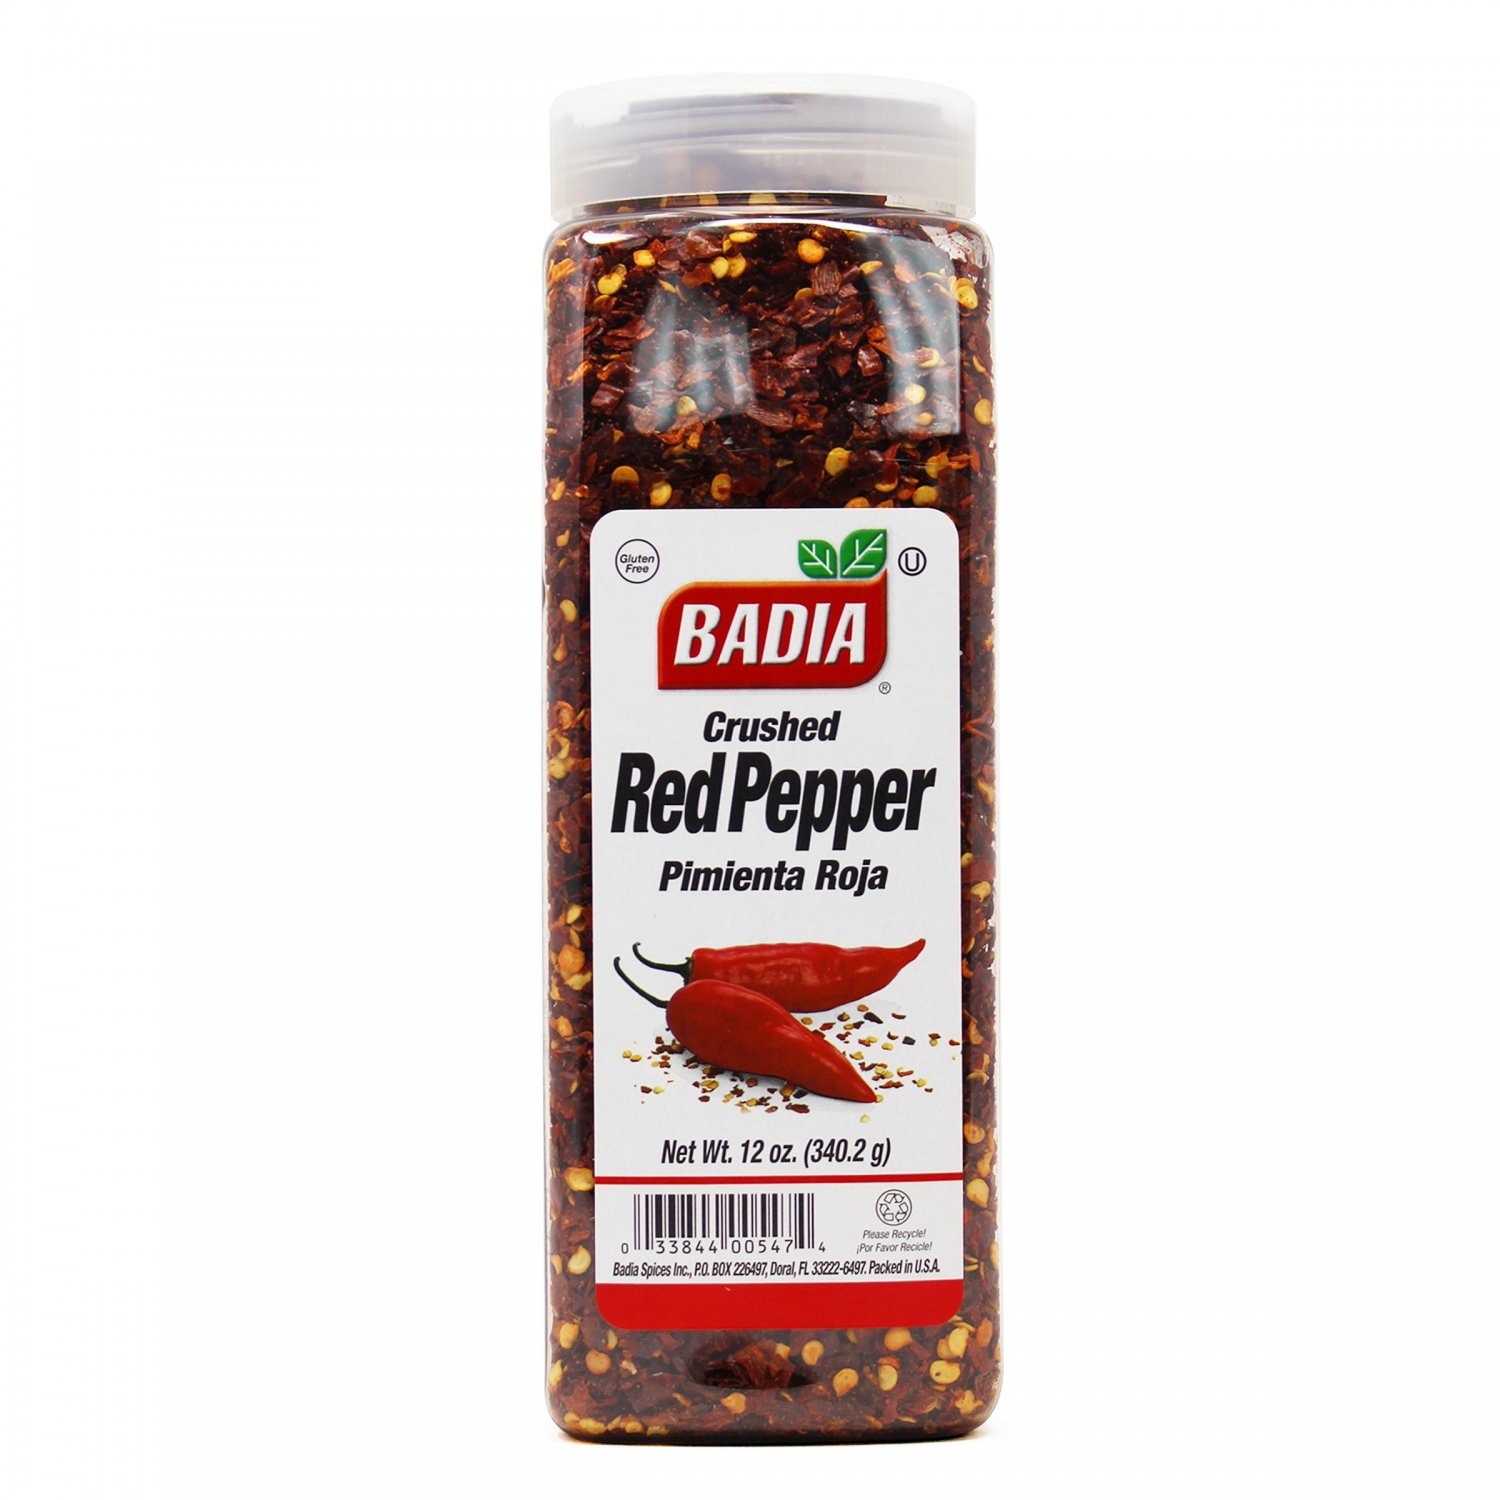 Badia Red Pepper Ground / Pimienta Roja 12 OZ